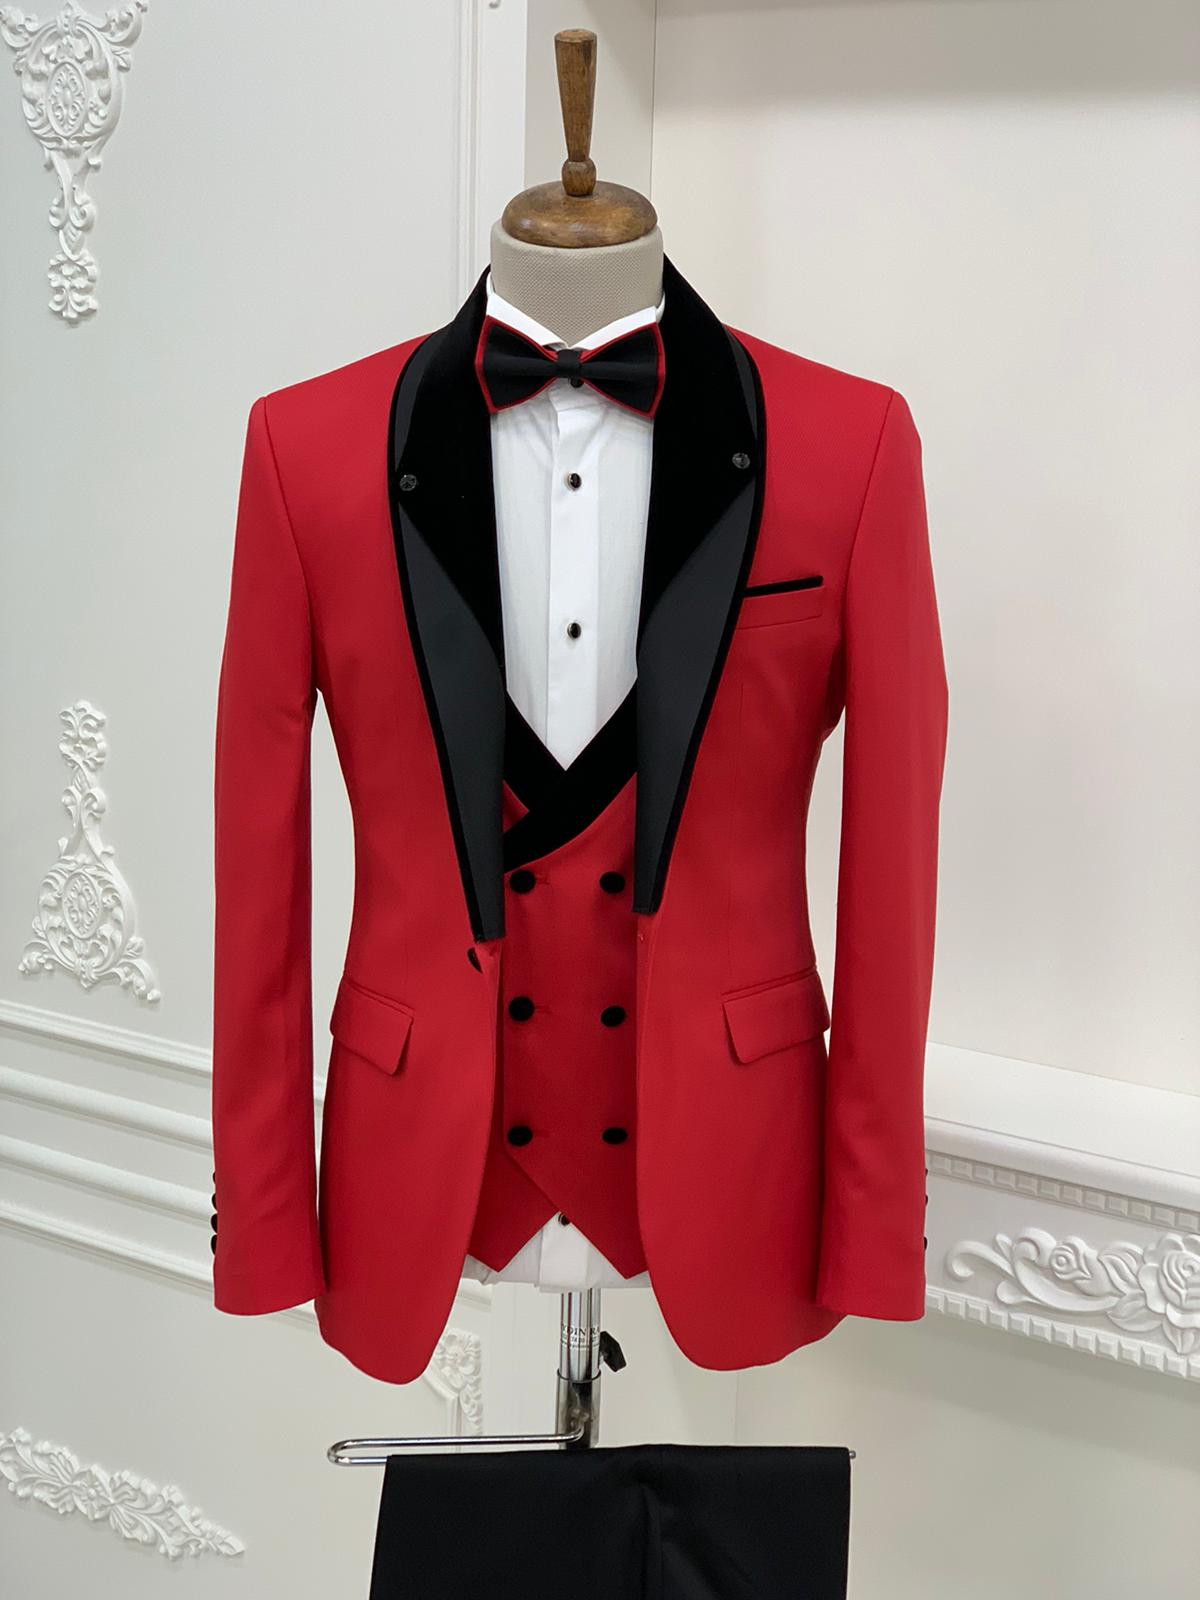 Buy Red Slim Fit Velvet Shawl Lapel Tuxedo by GentWith.com